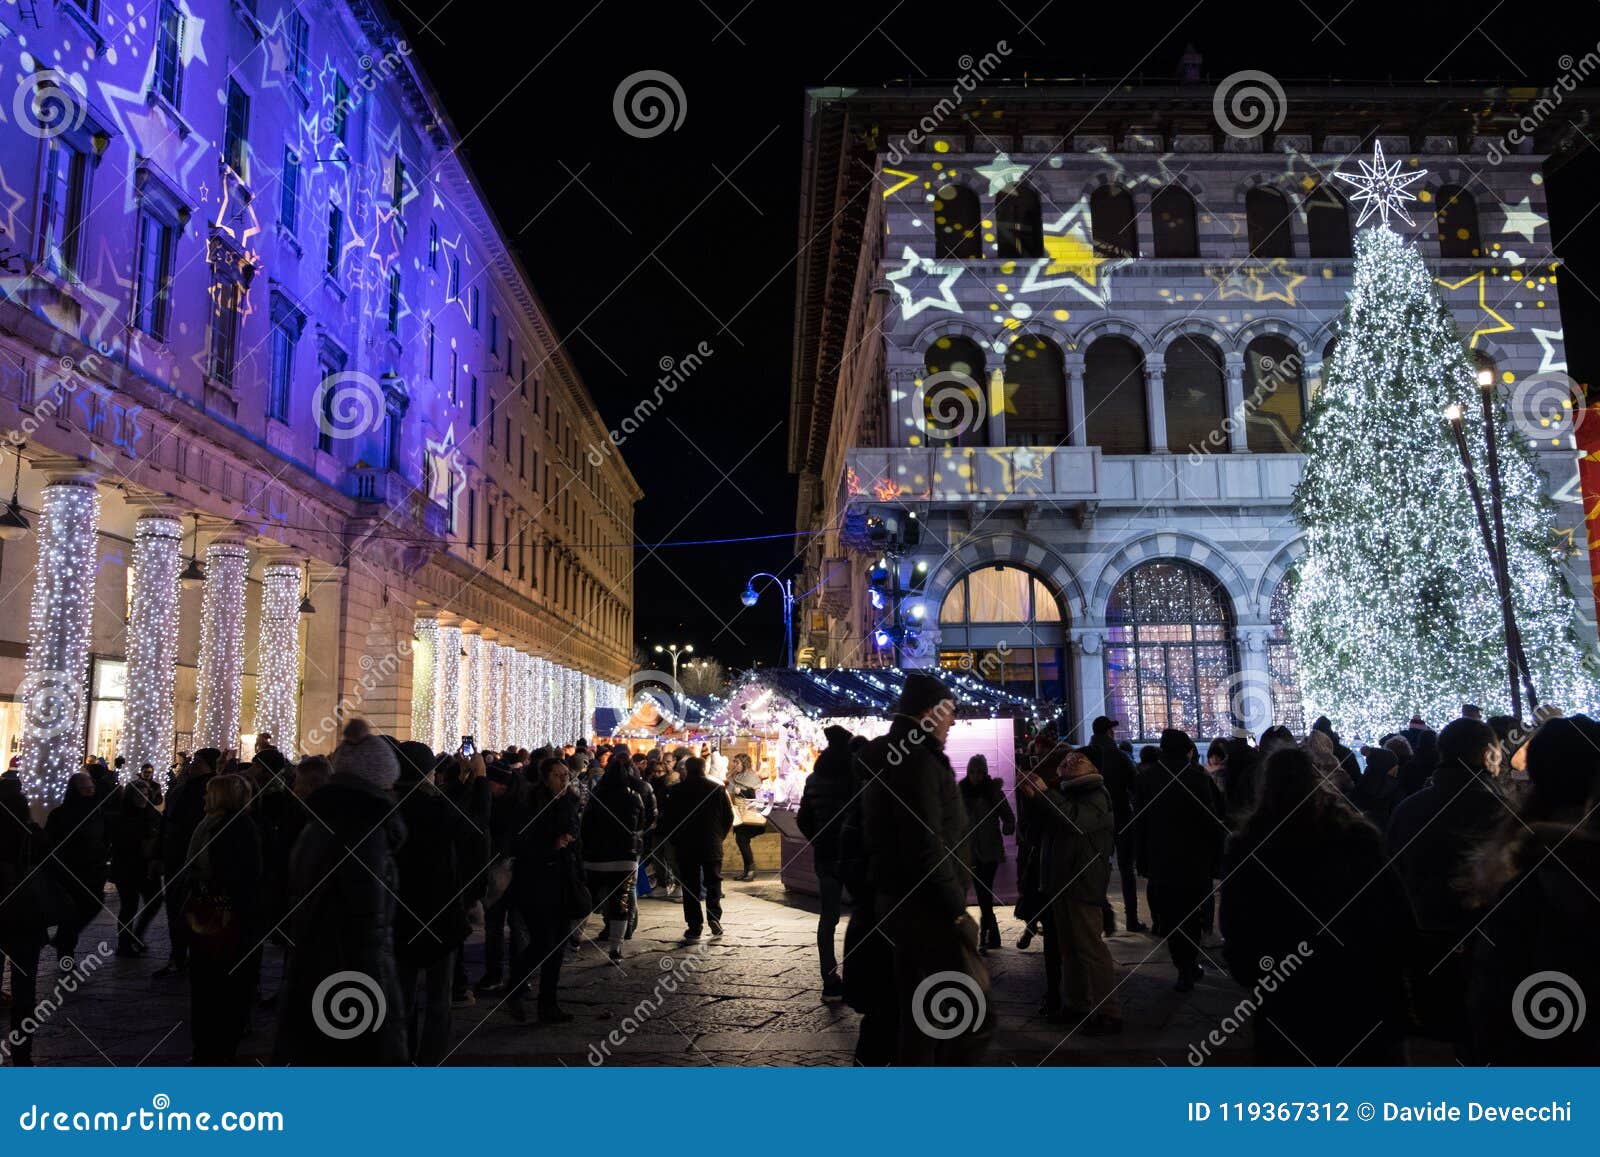 COMO, ITALY - December 28th, 2017: the Christmas Lights Illuminate the ...